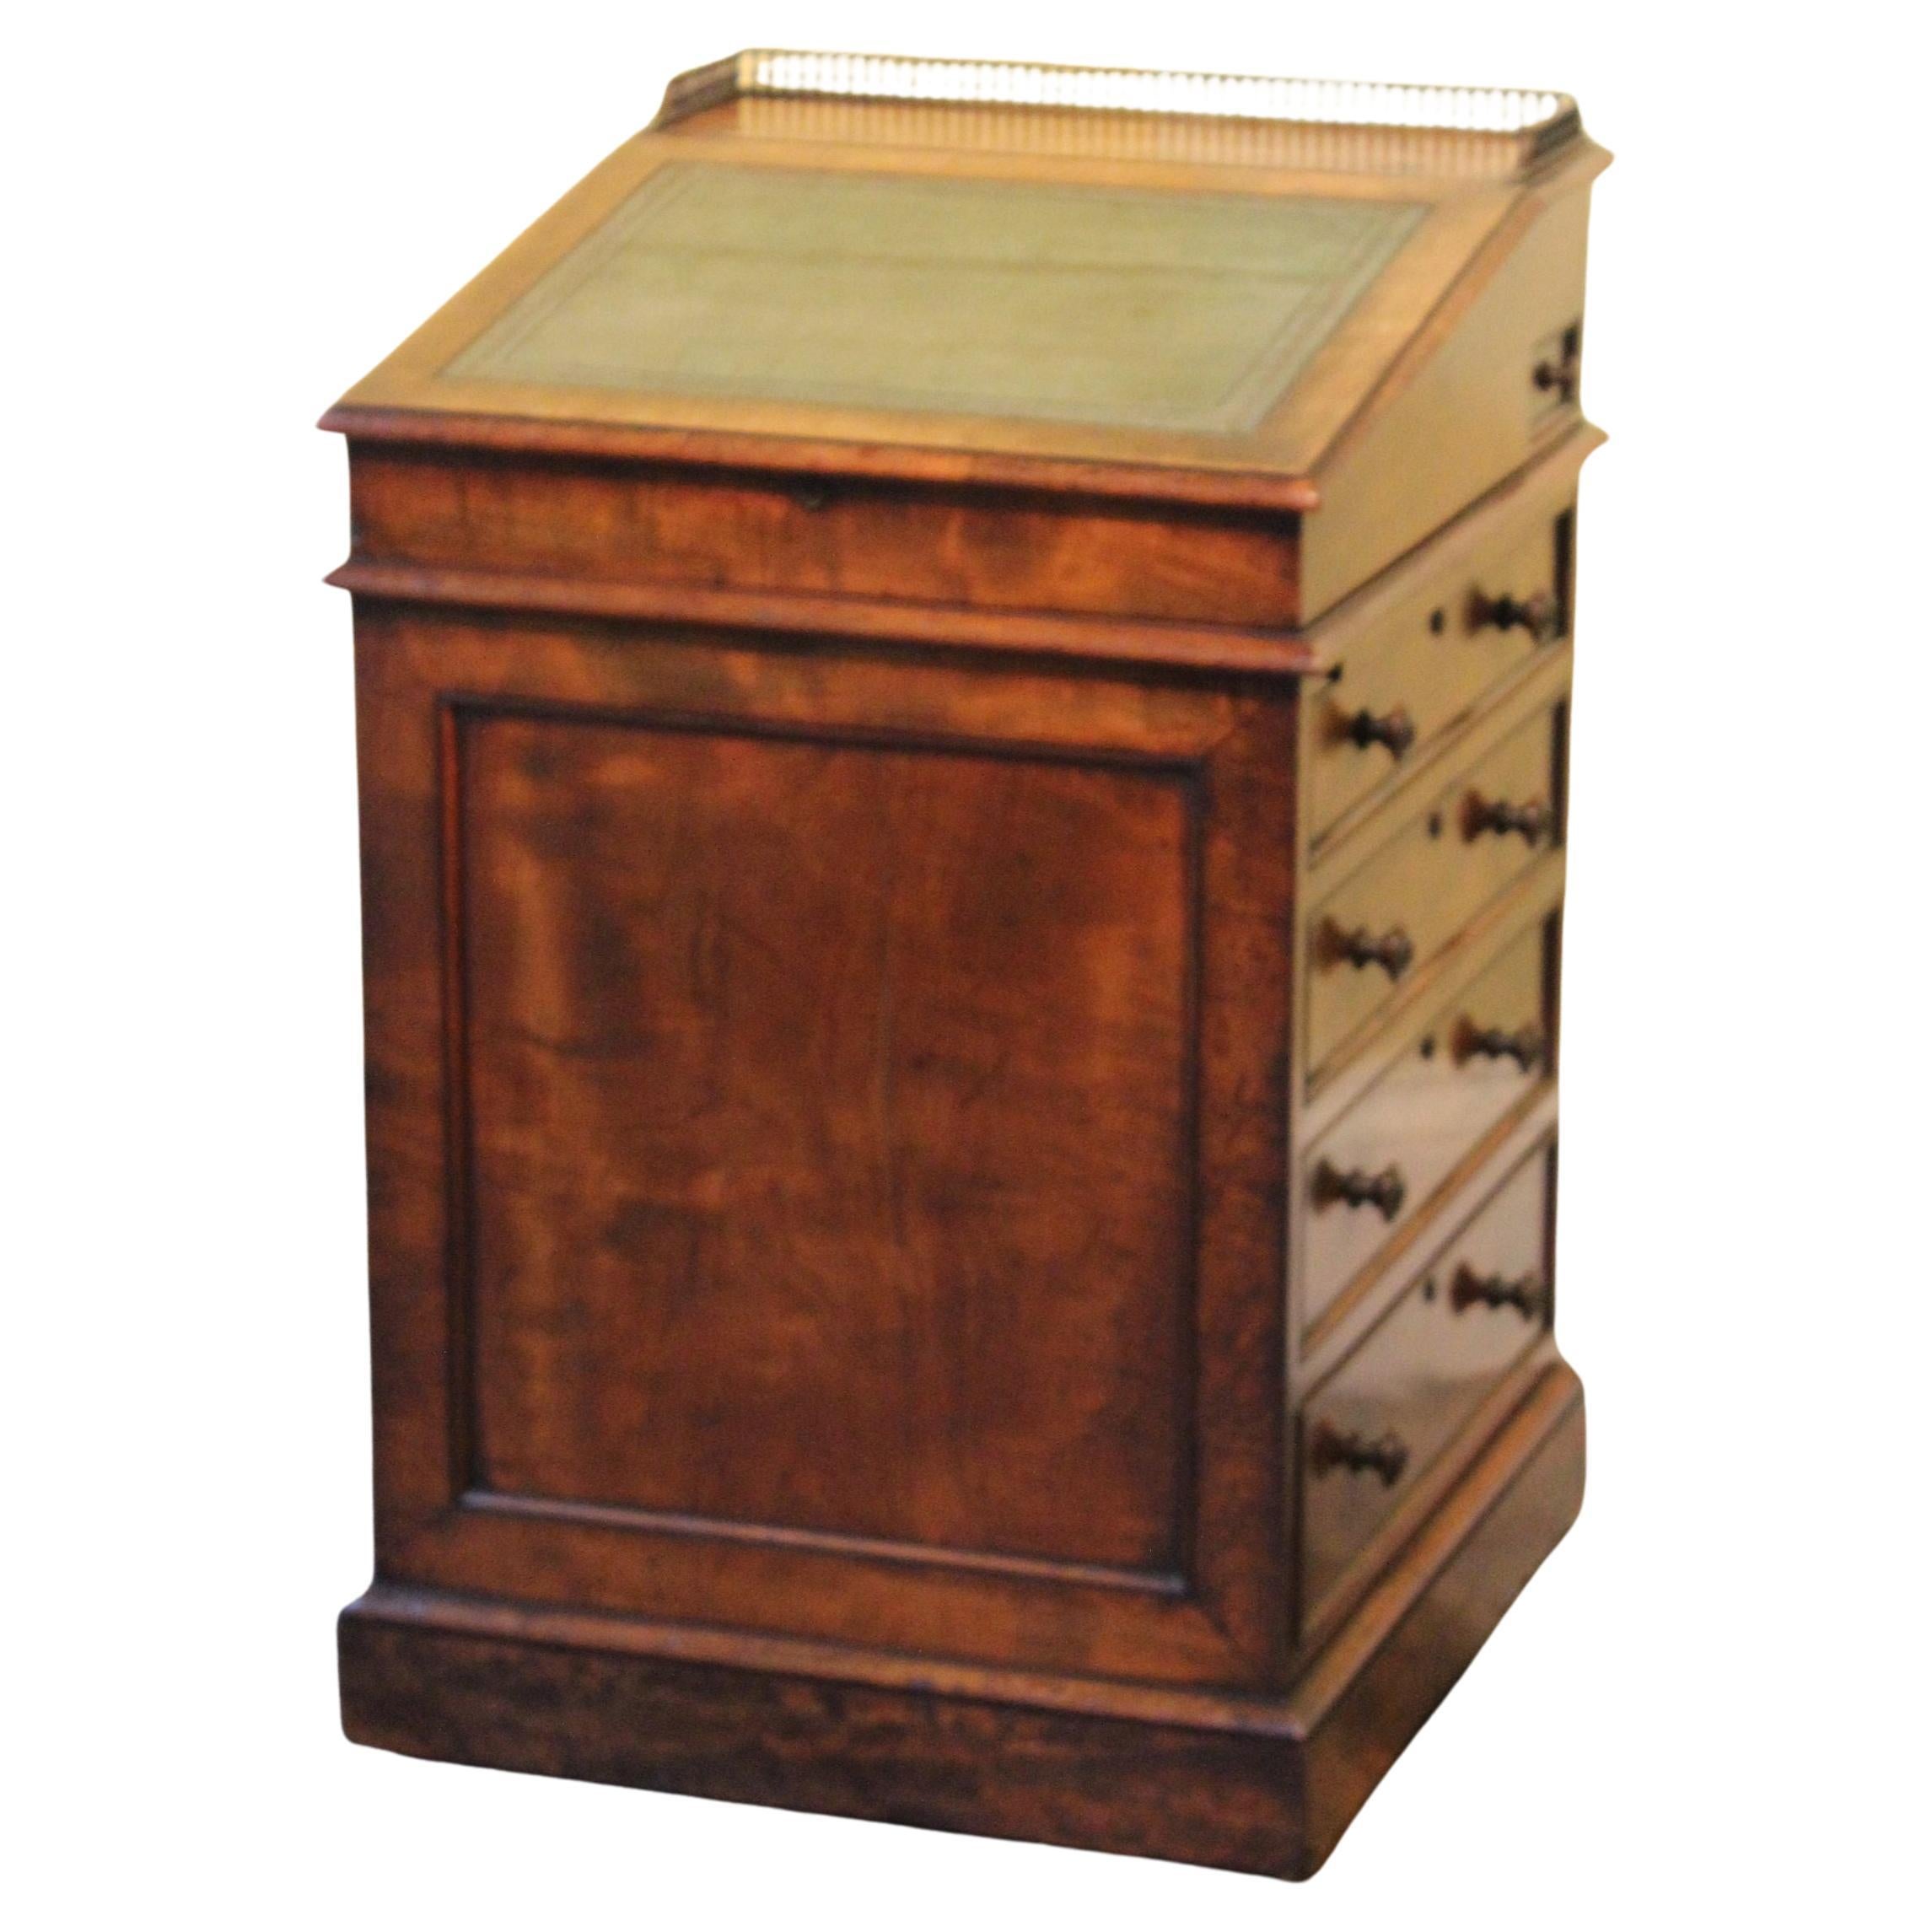 A Fine 19thc Davenport Desk (5831)